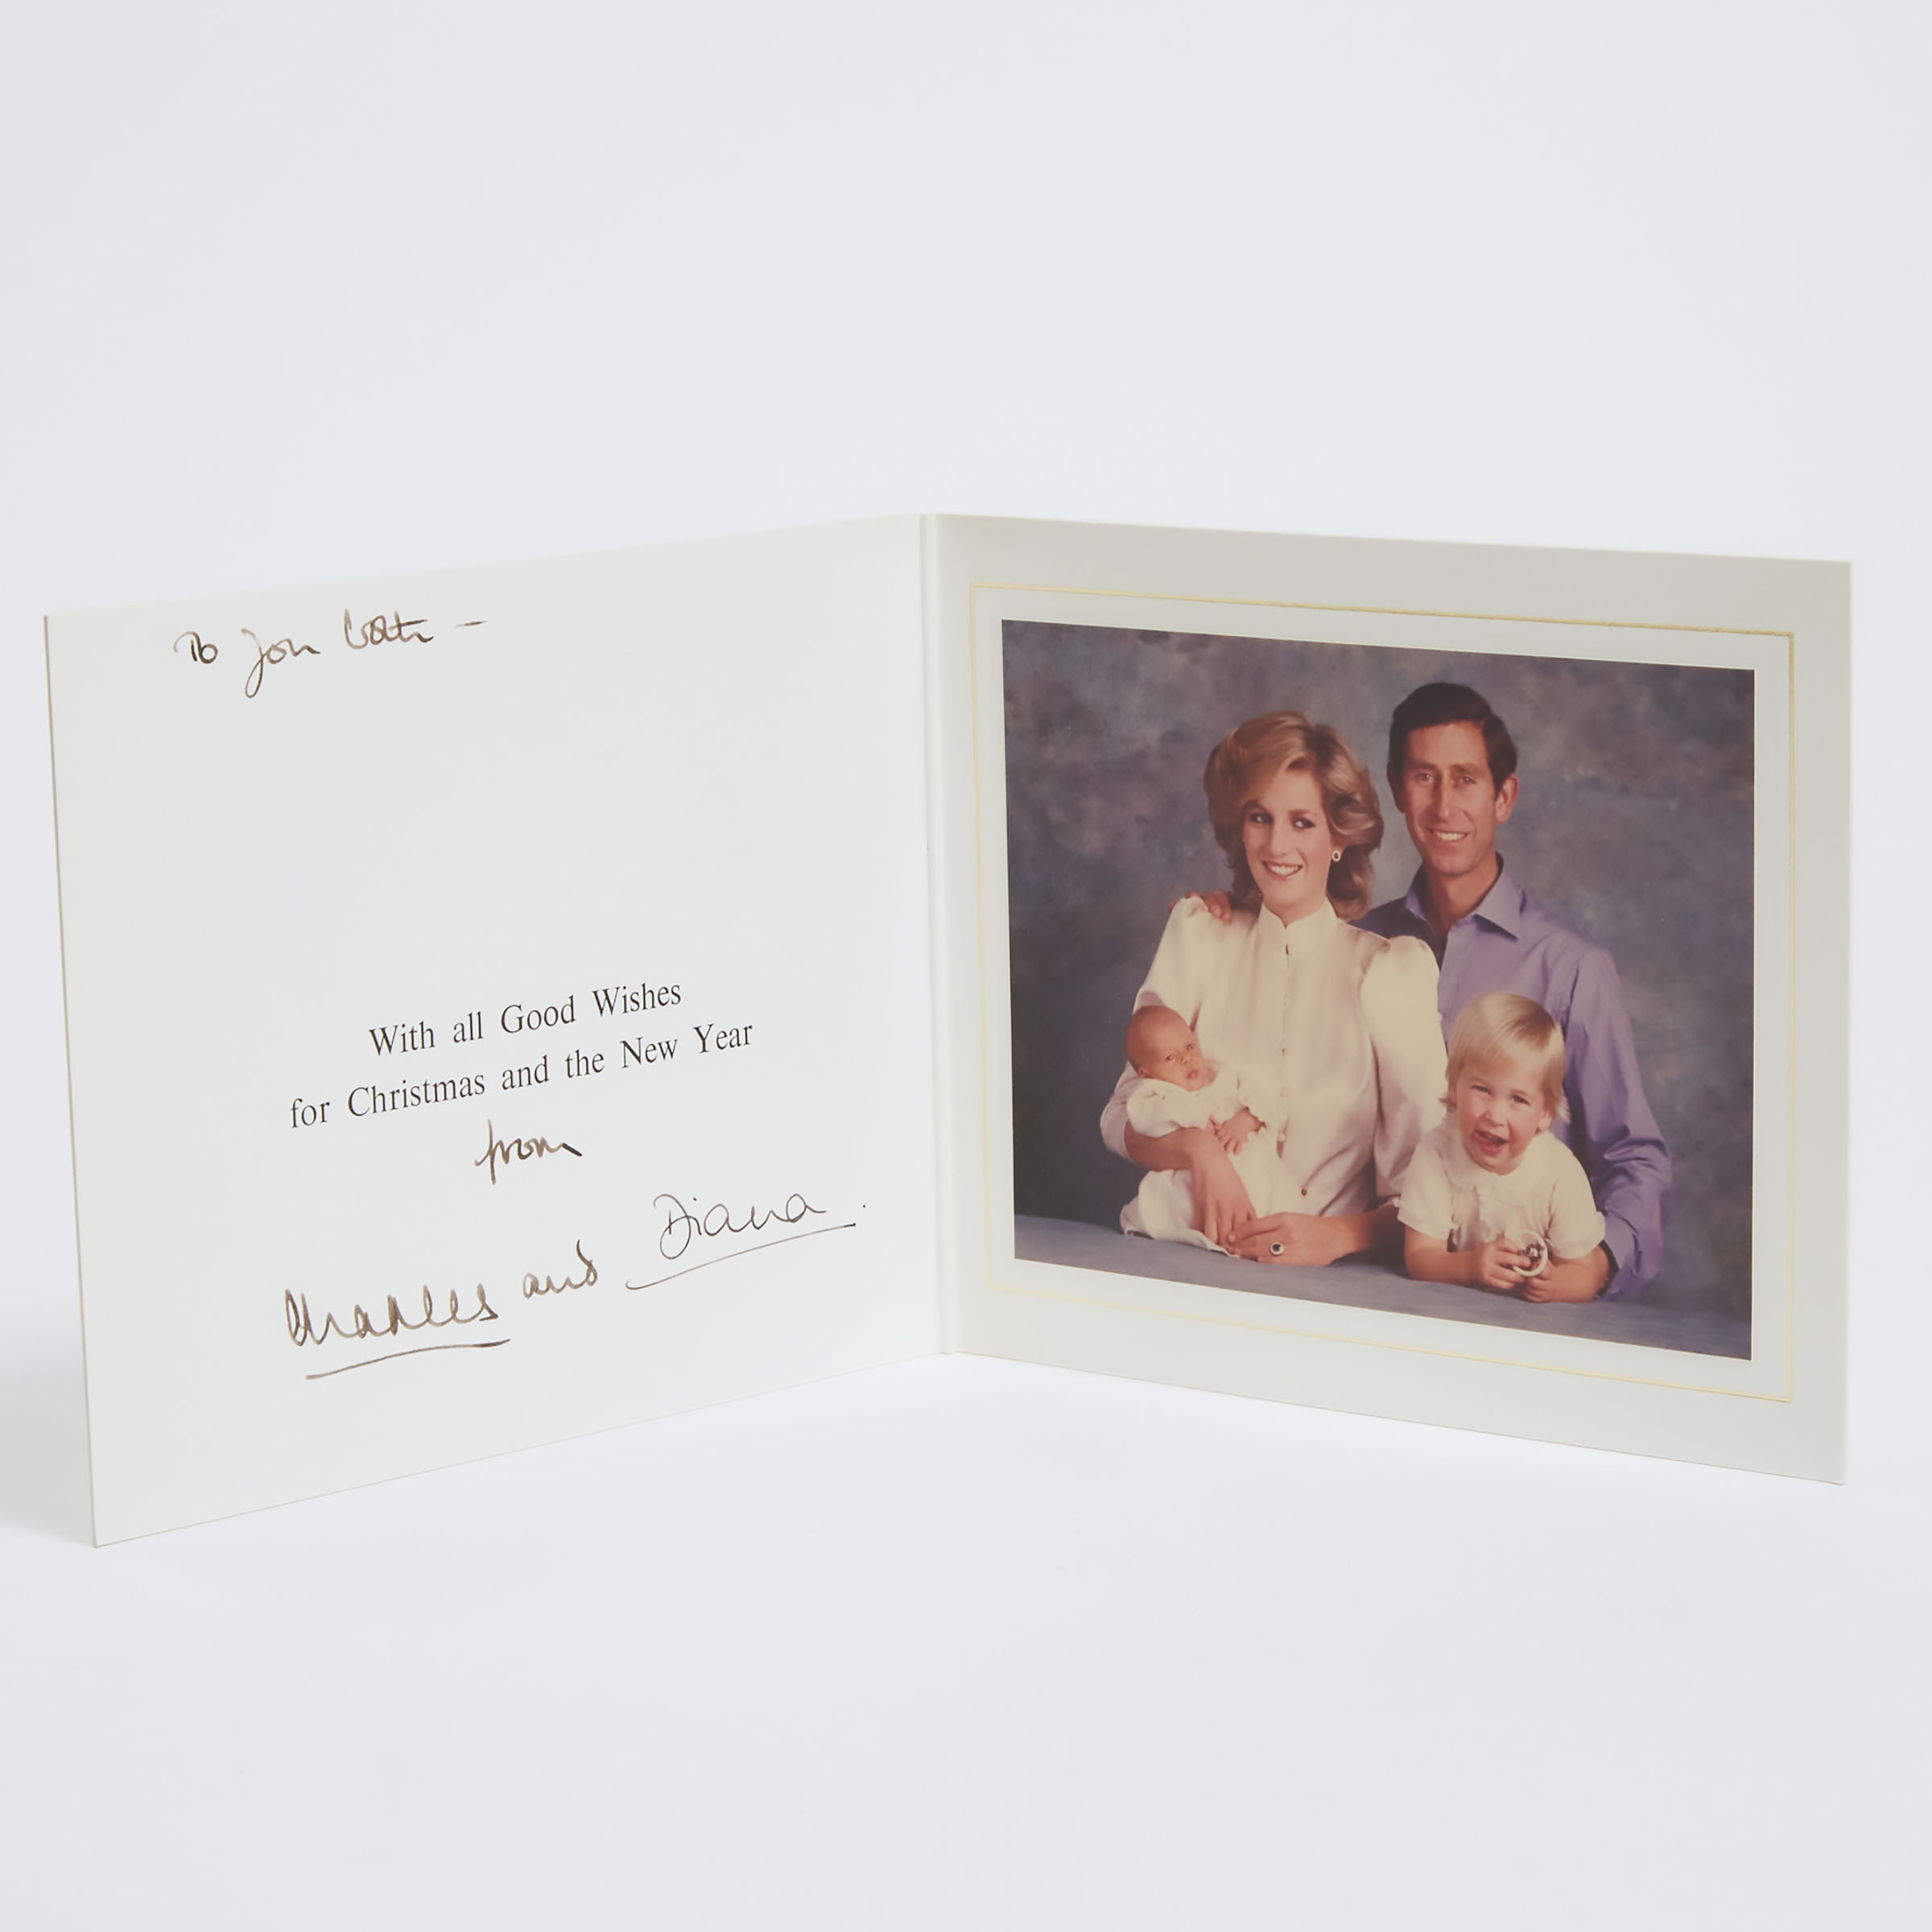 Charles and Diana Christmas Card, 1984